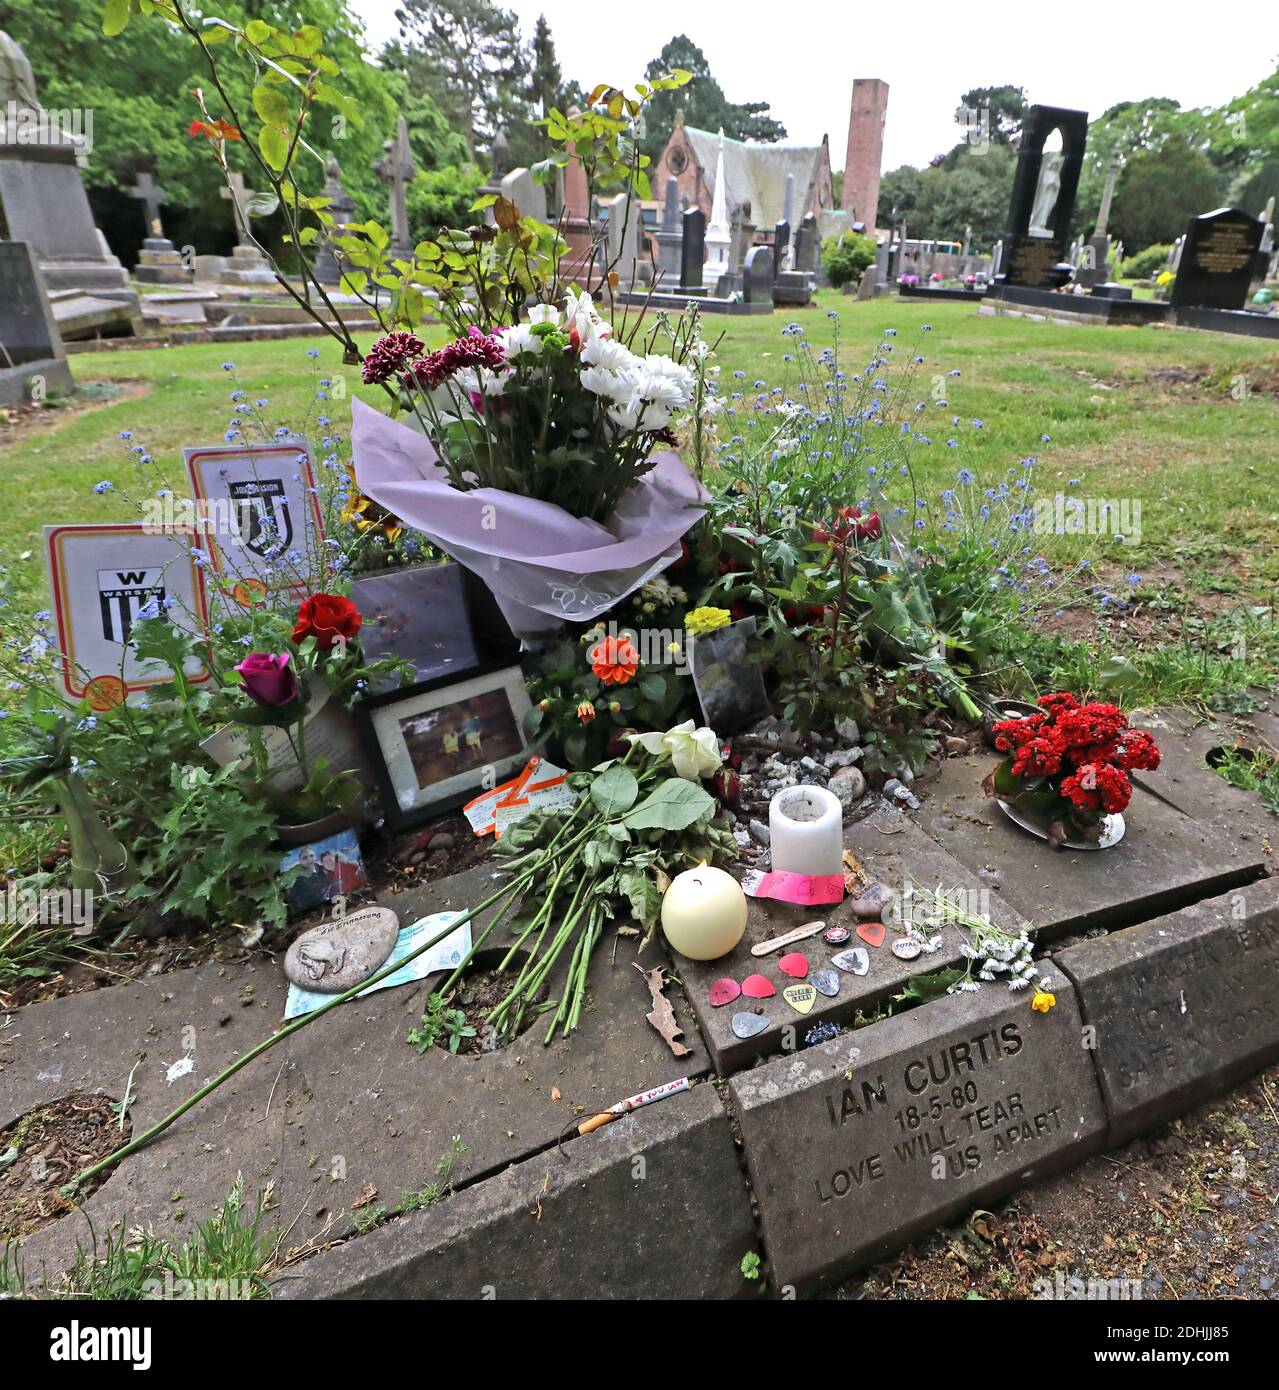 Ian Curtis memorial stone at  Macclesfield Crematorium,Prestbury Road,Cheshire,England,UK,SK10,Factory label,Joy Division vocalist,song writer Stock Photo